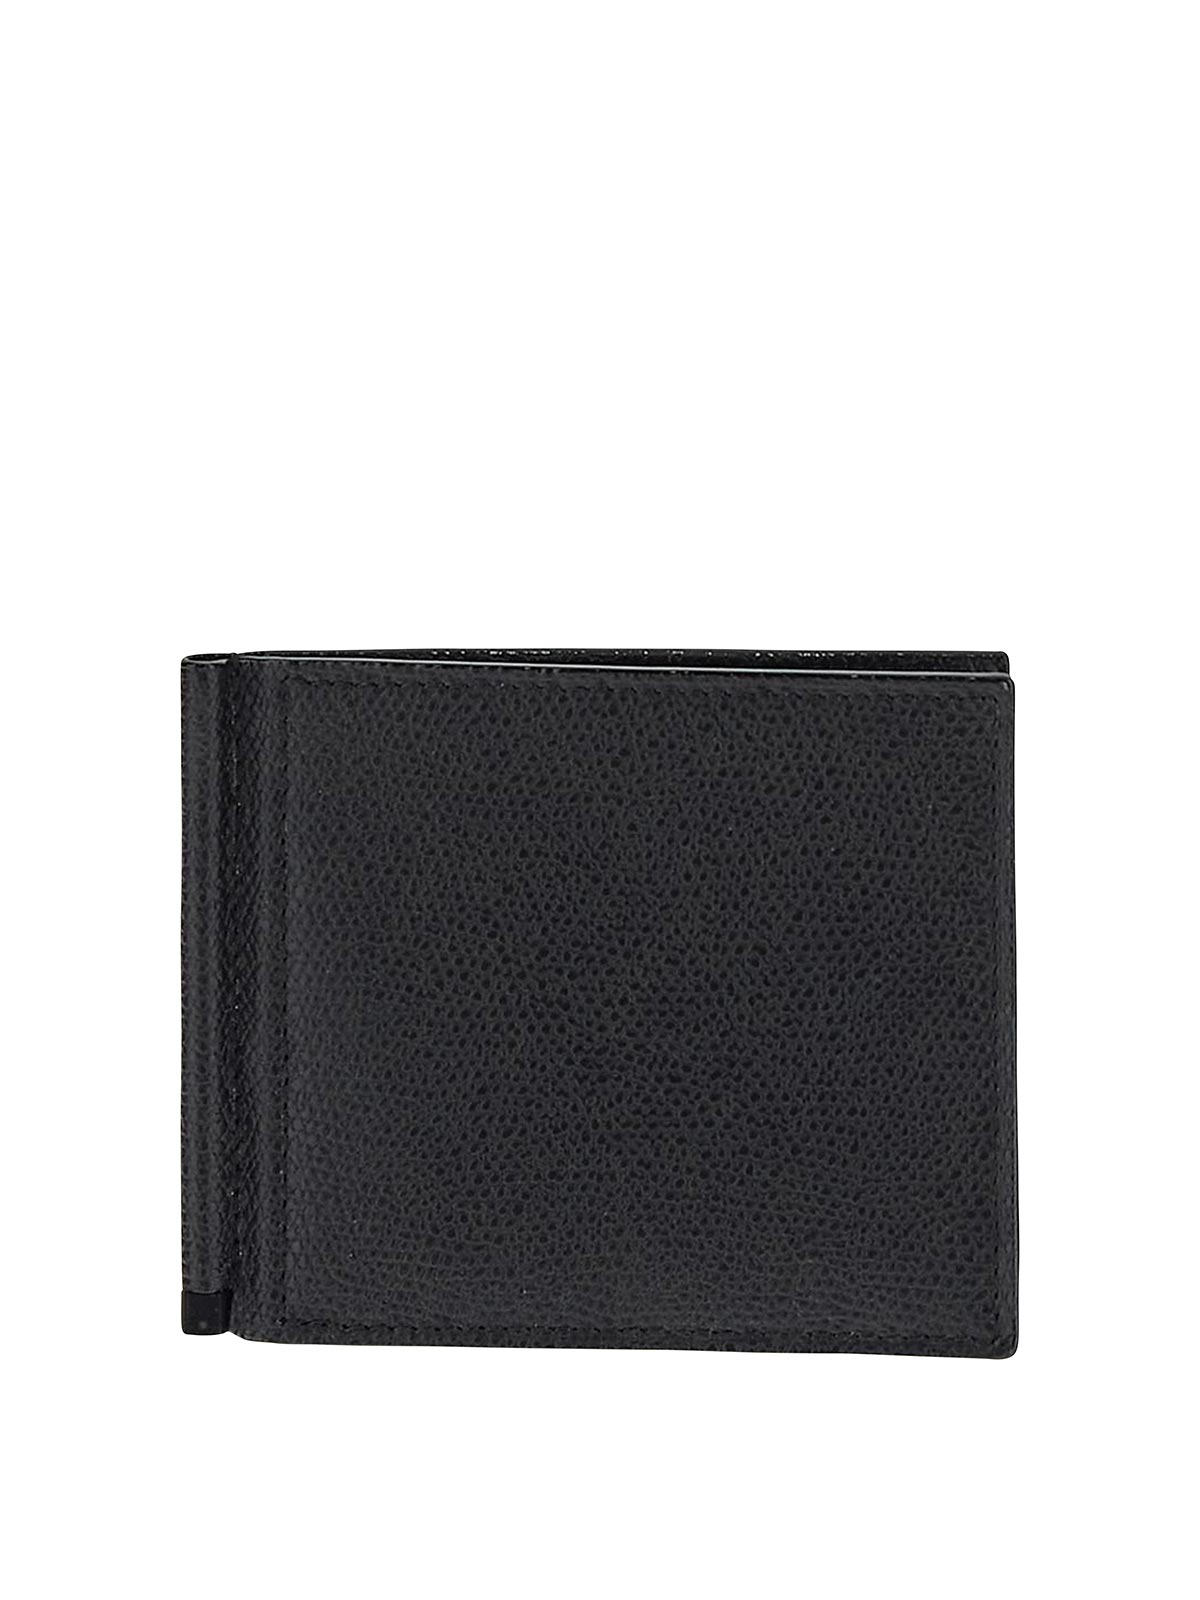 Valextra Grained Wallet In Black